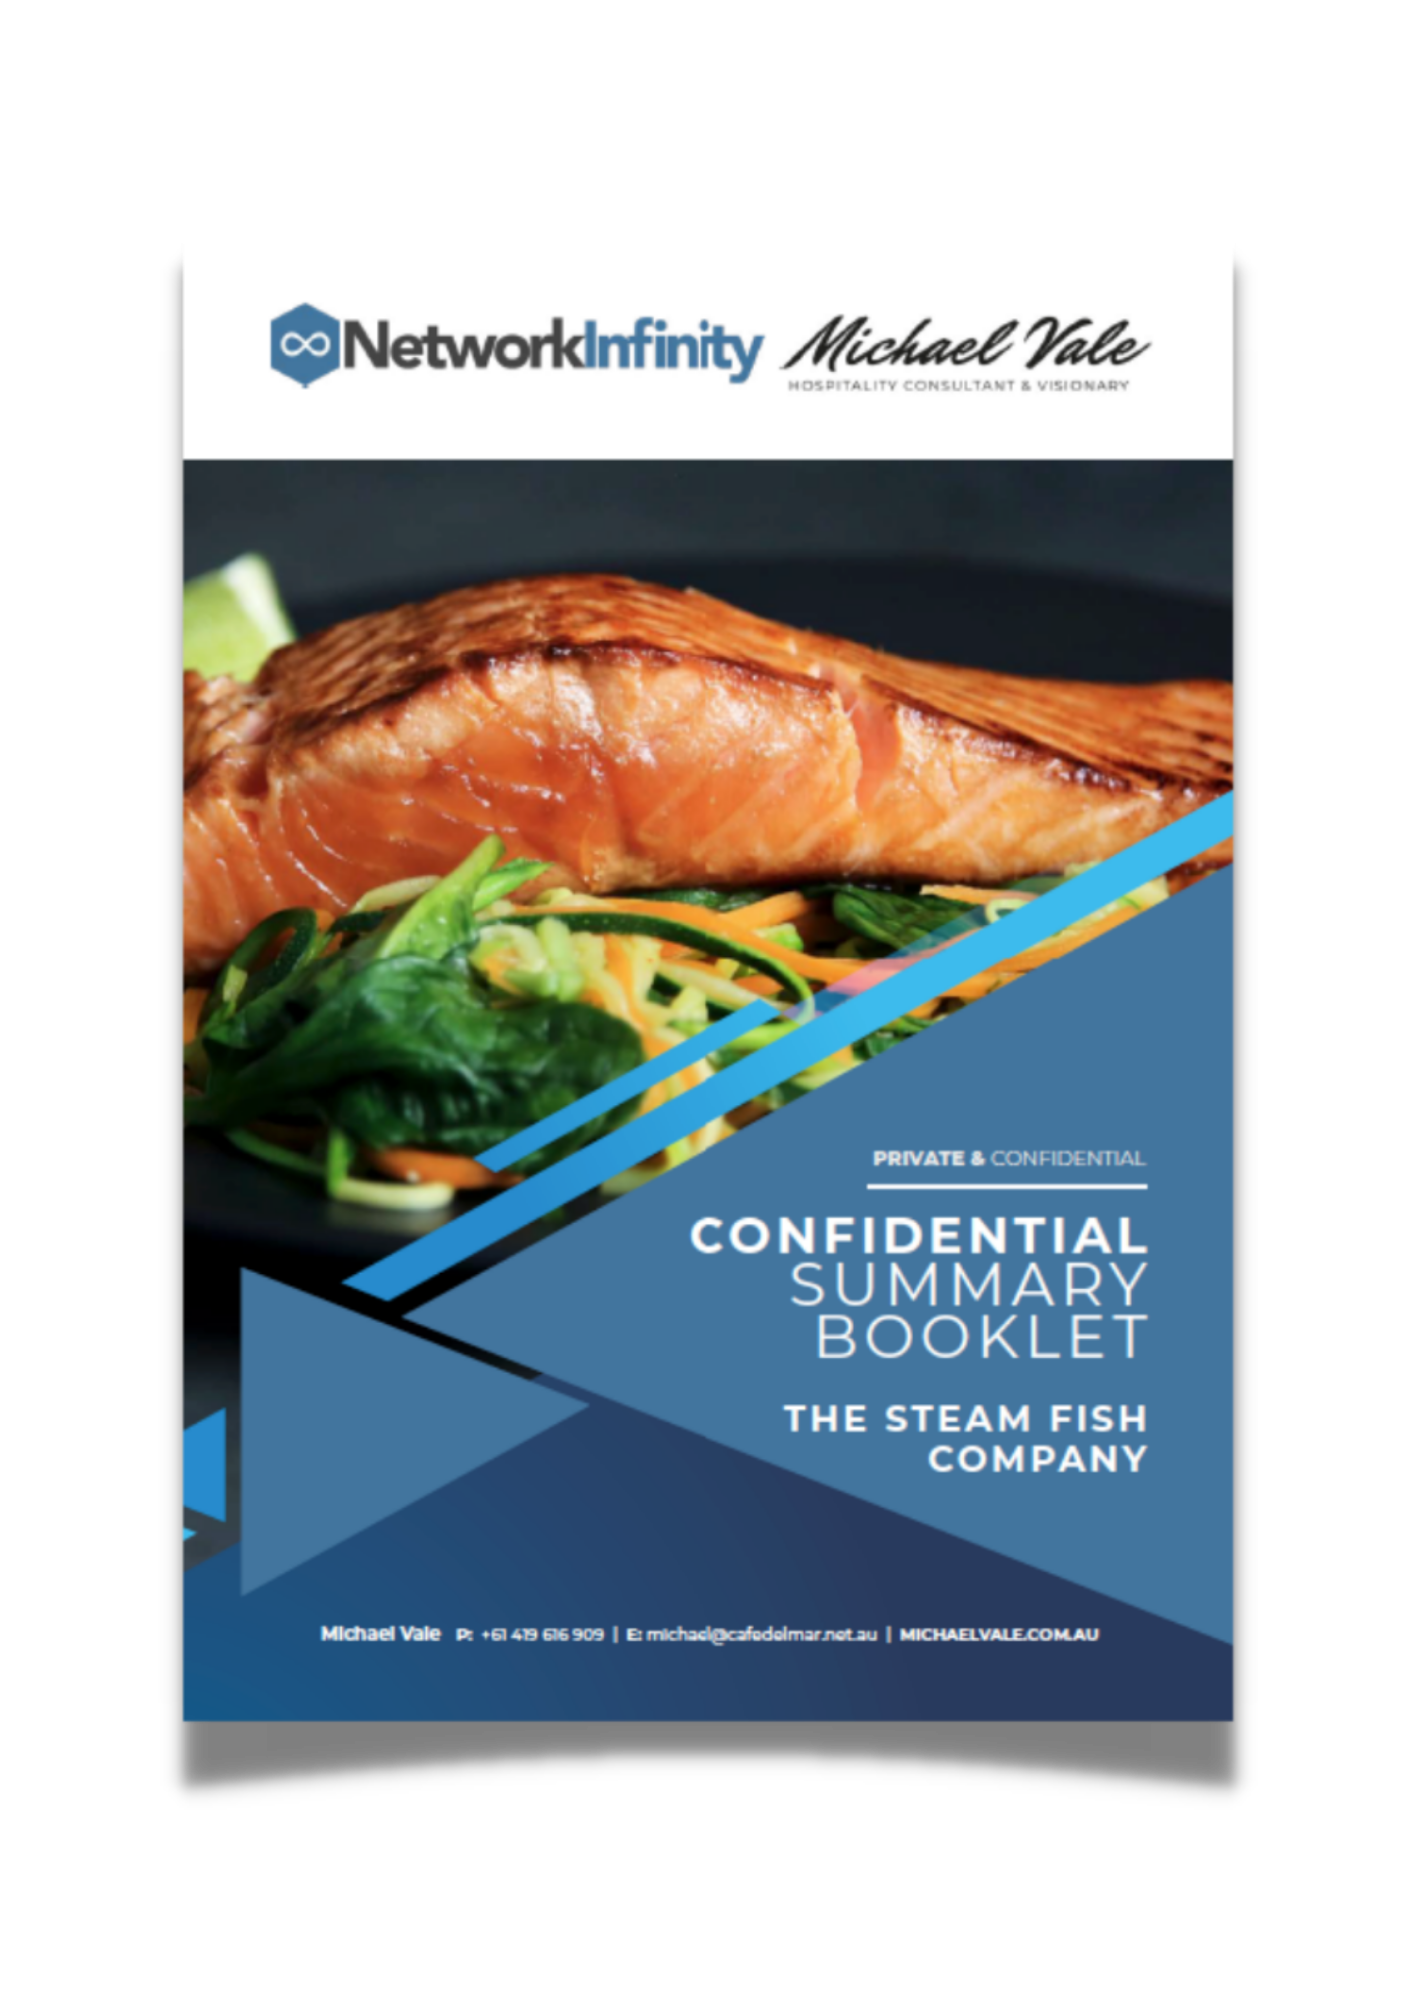 V2_The Steam Fish Company  - Confidential Summary Booklet(Medium Resolution)